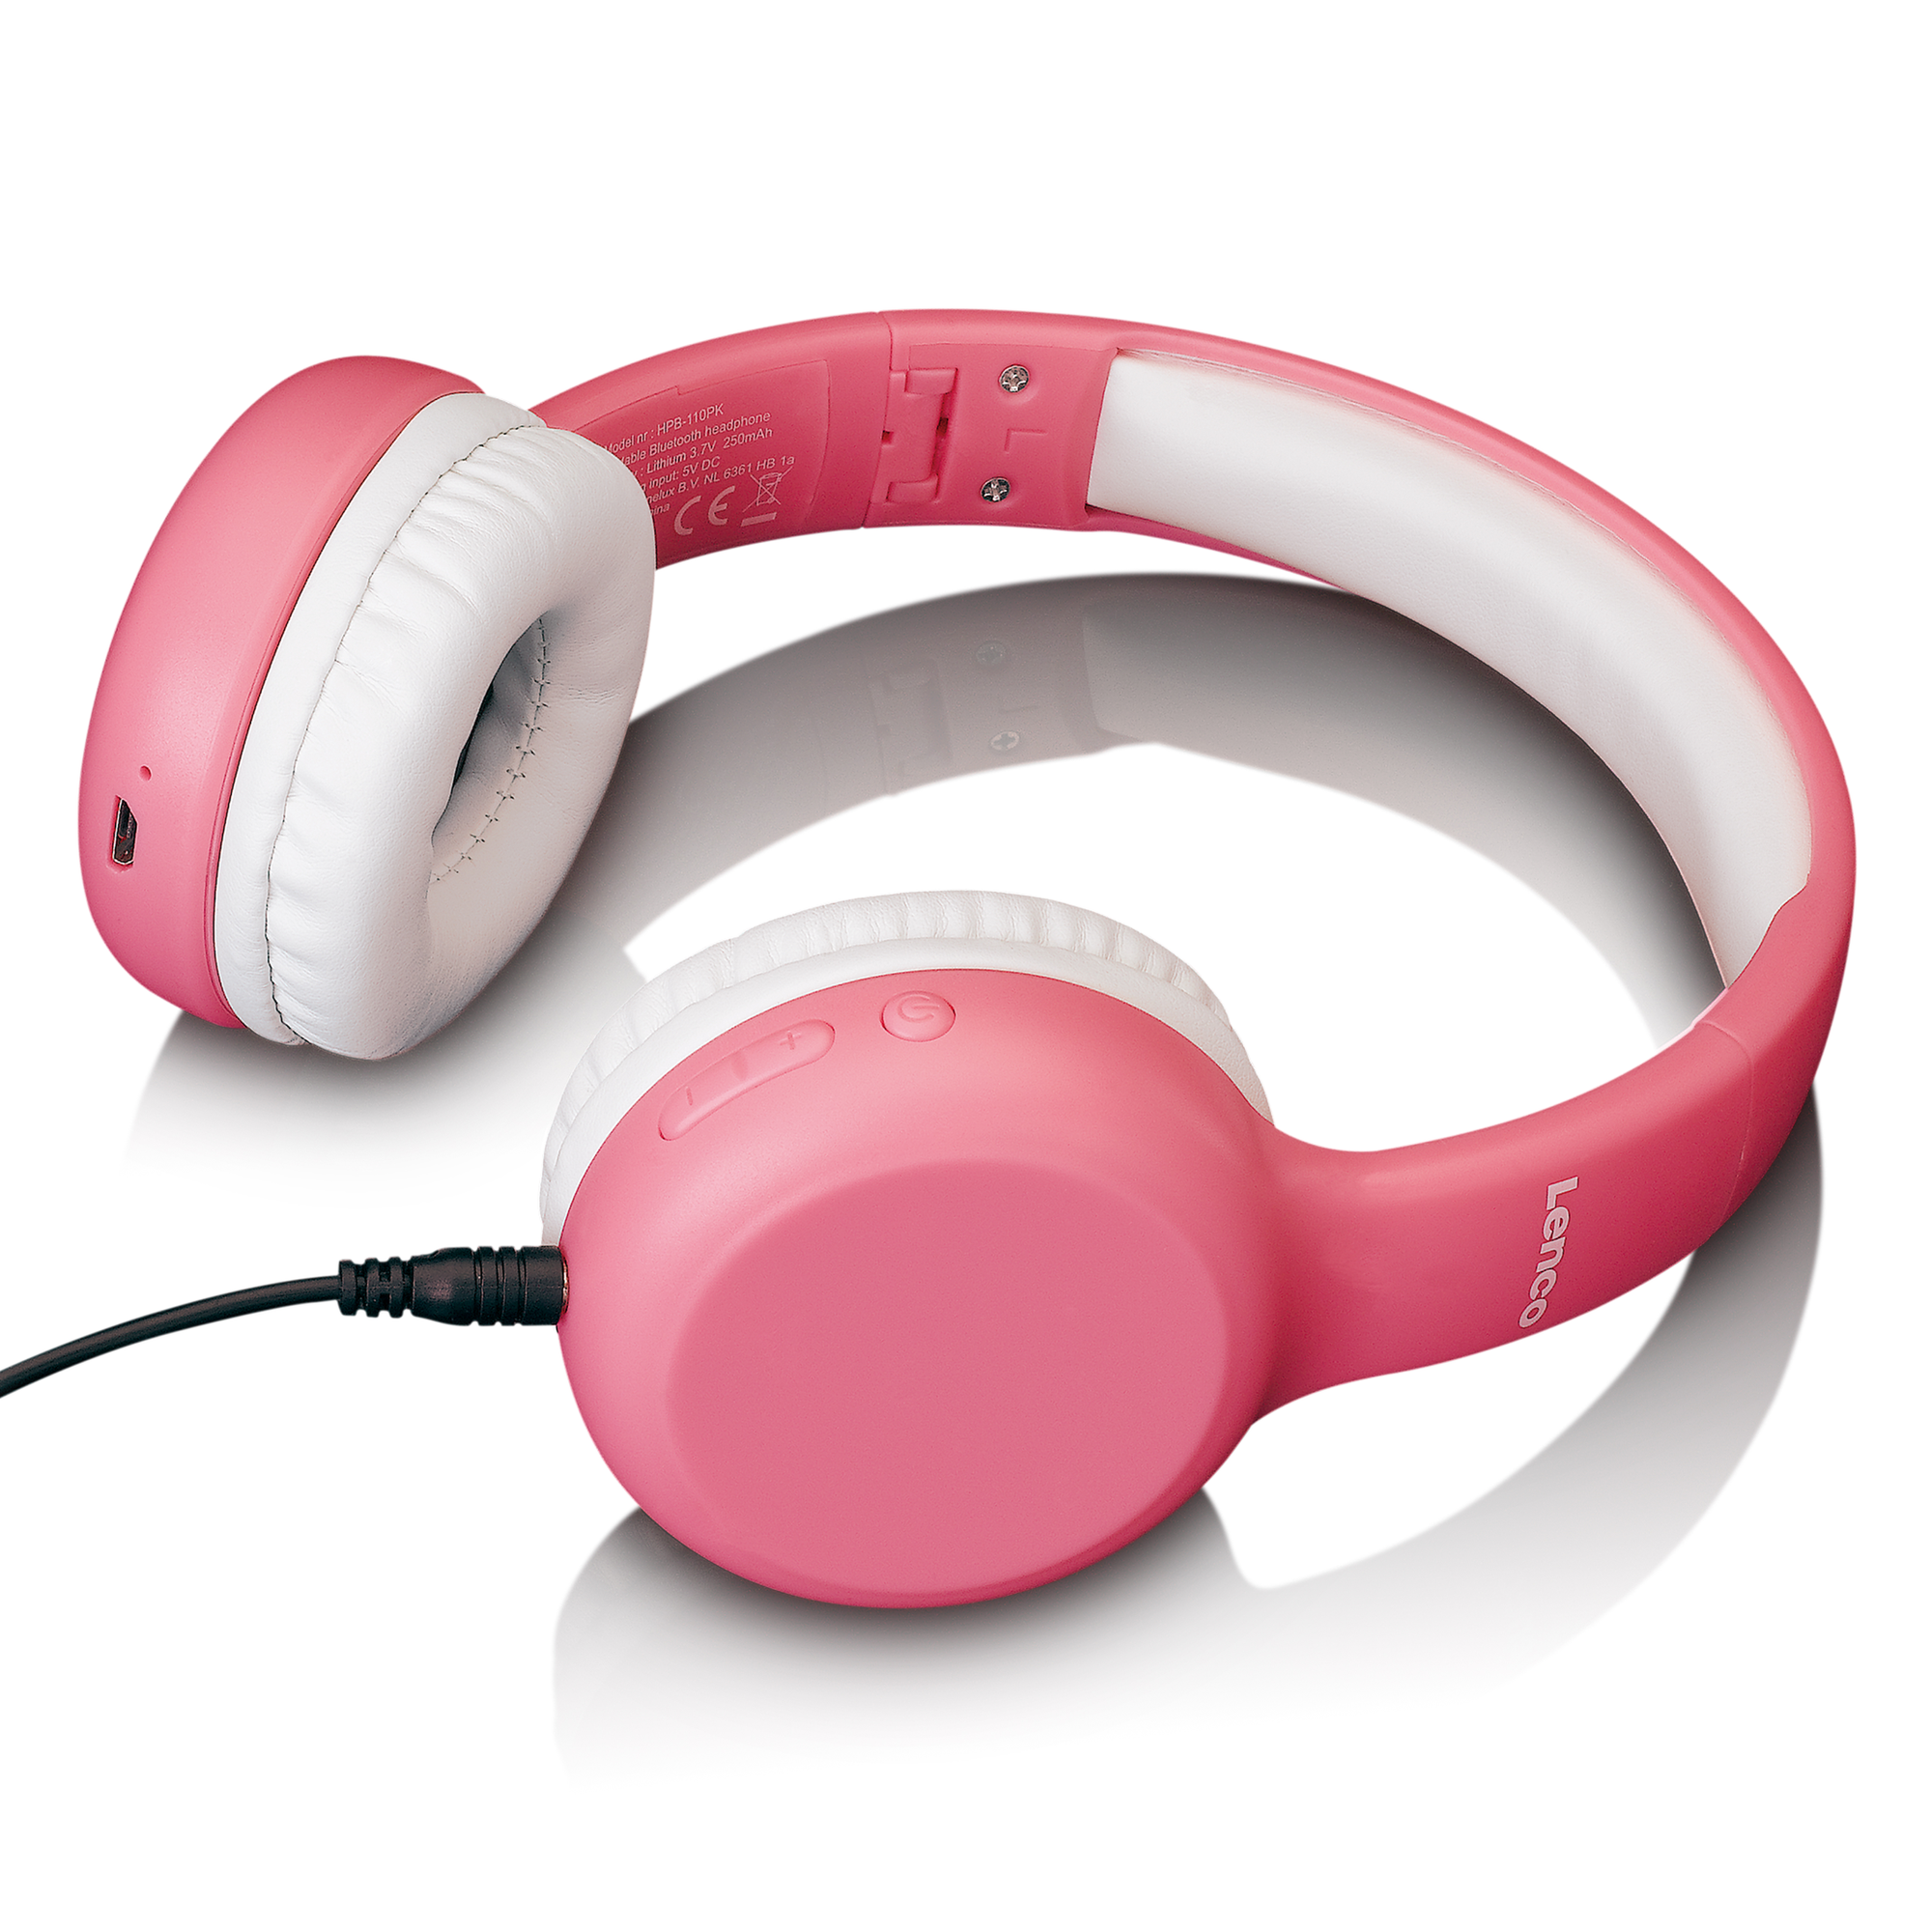 LENCO HPB-110PK - Bluetooth Bluetooth Kinder, faltbare On-ear Headphone Pink